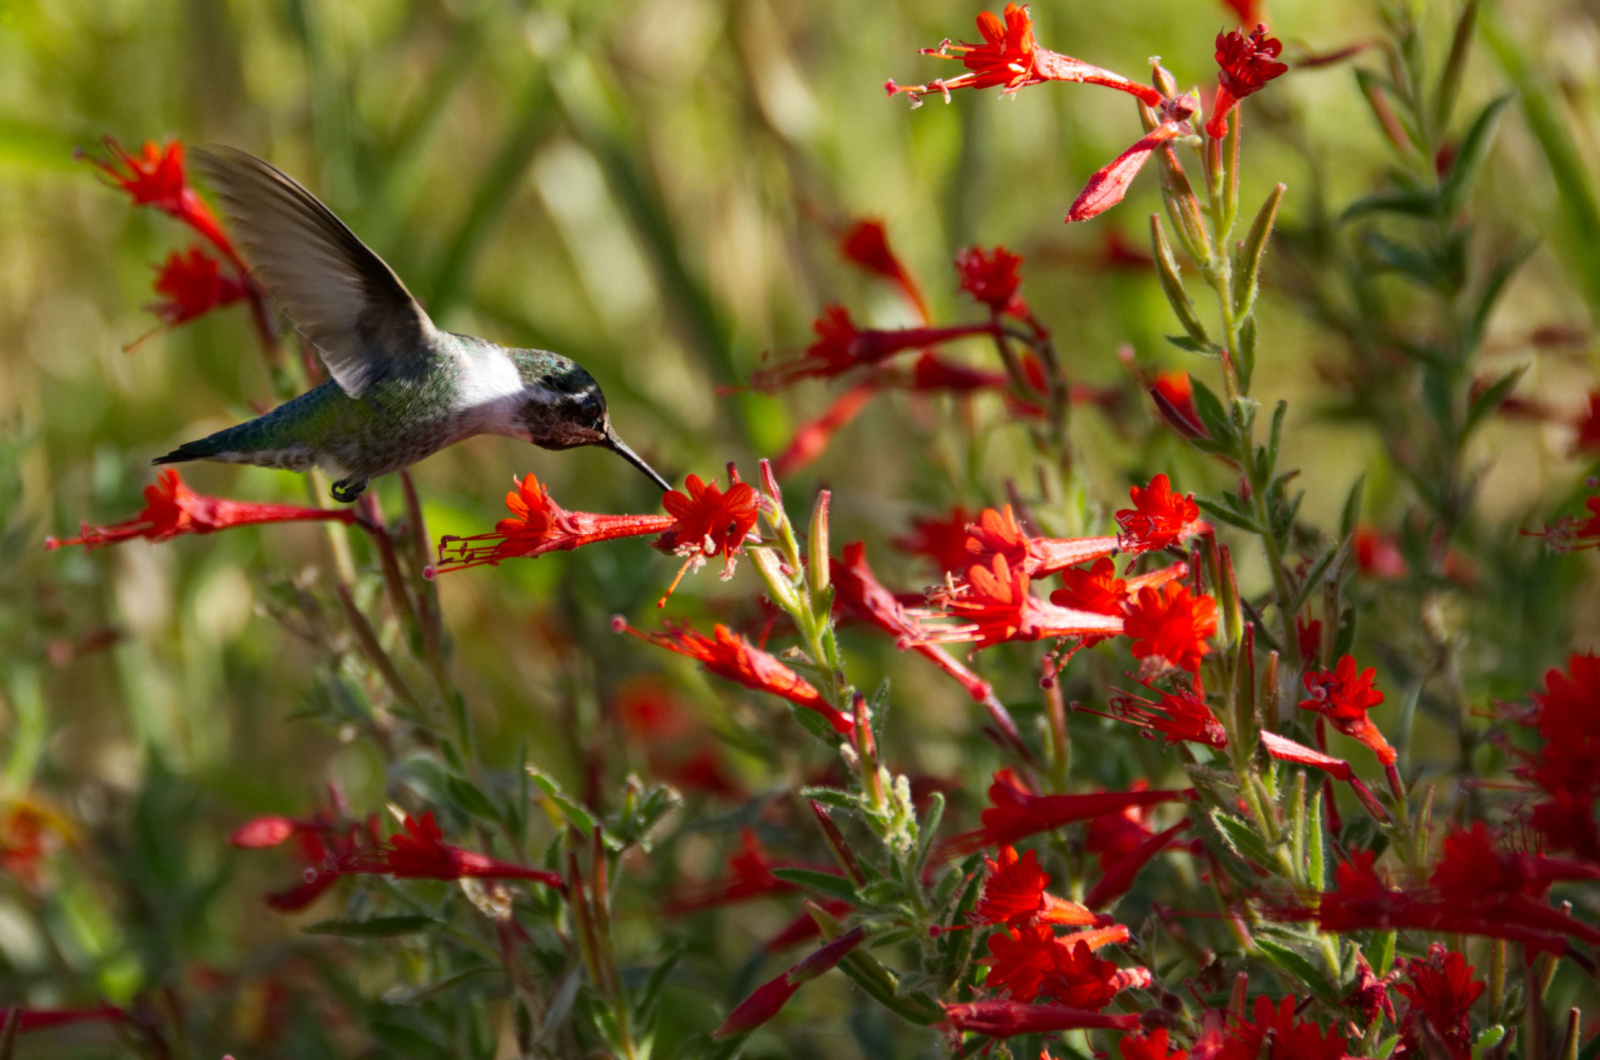 Hummingbird feeding in a field of red California Fuchsia